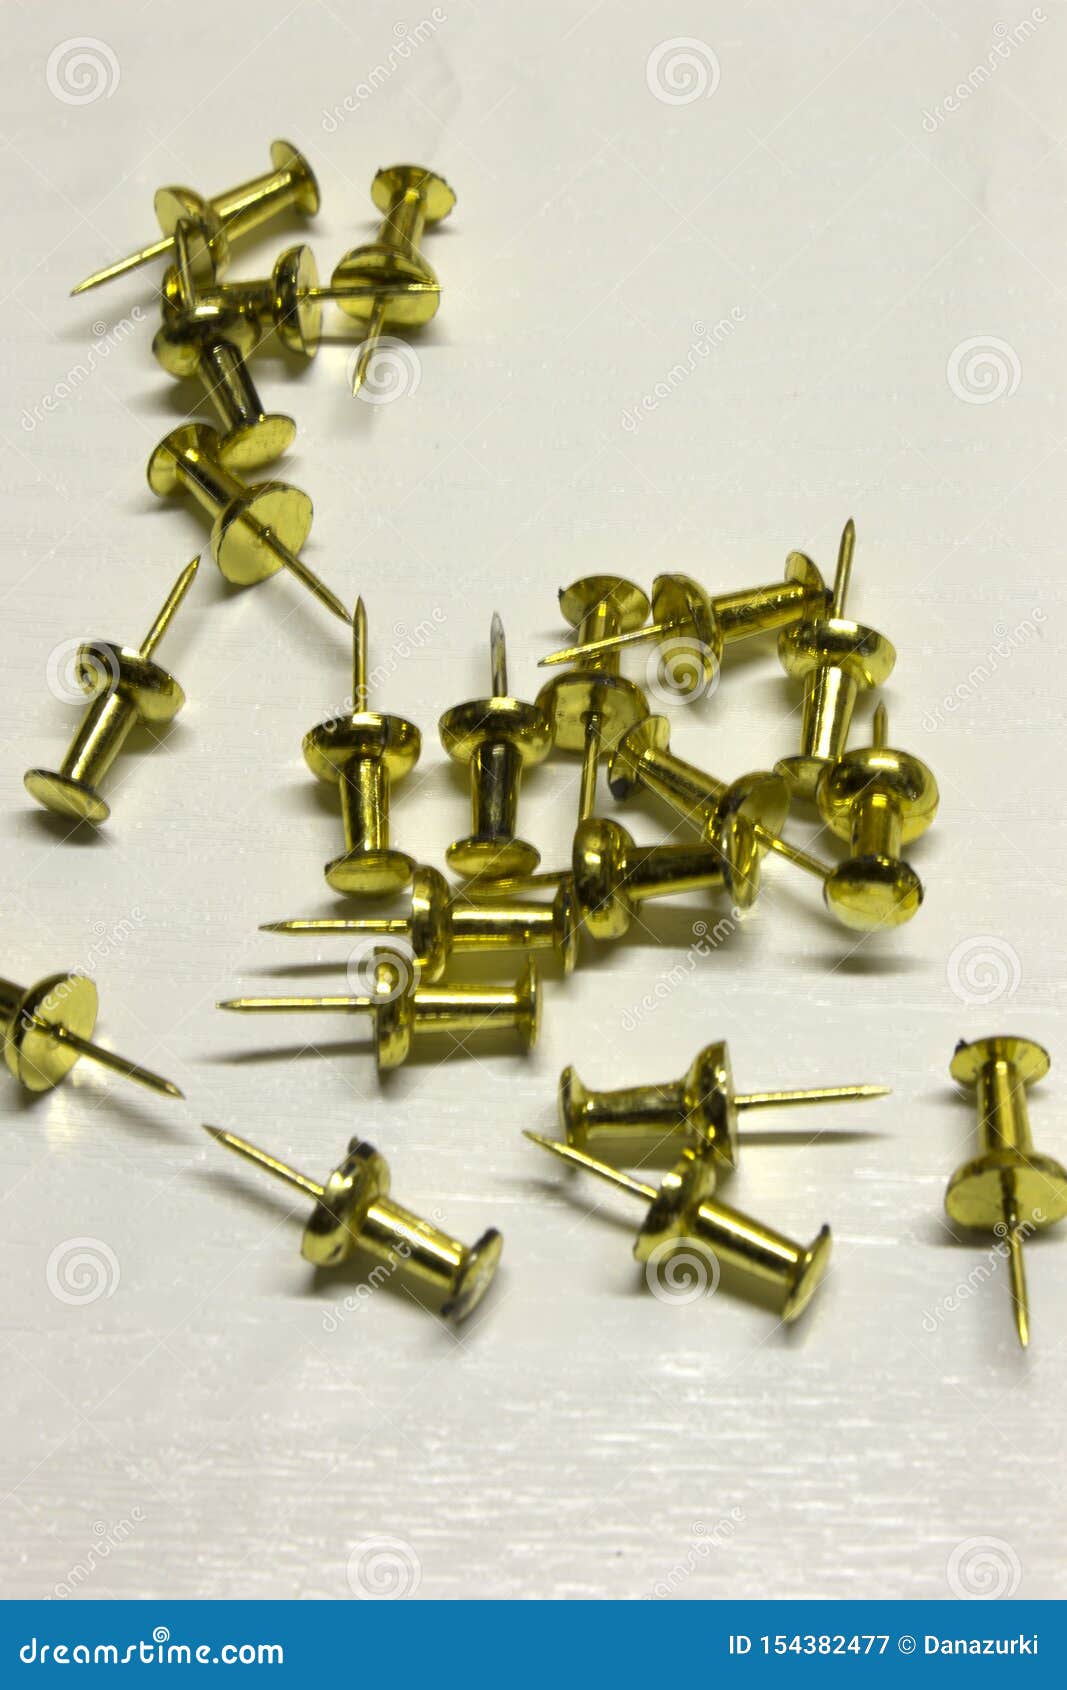 Gold Push pins stock image. Image of gold, push, sheet - 154382477